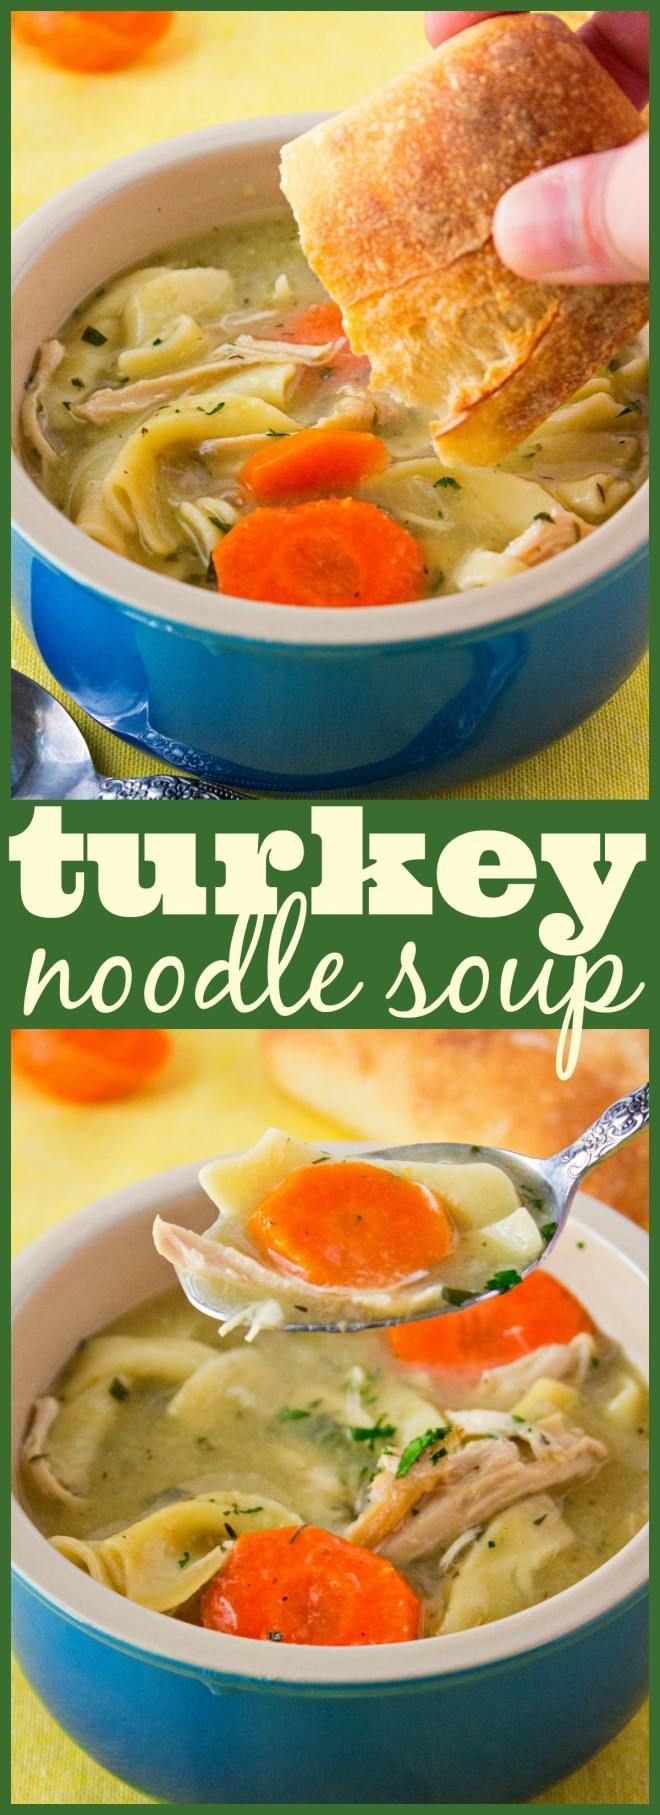 19 turkey soup crockpot healthy ideas